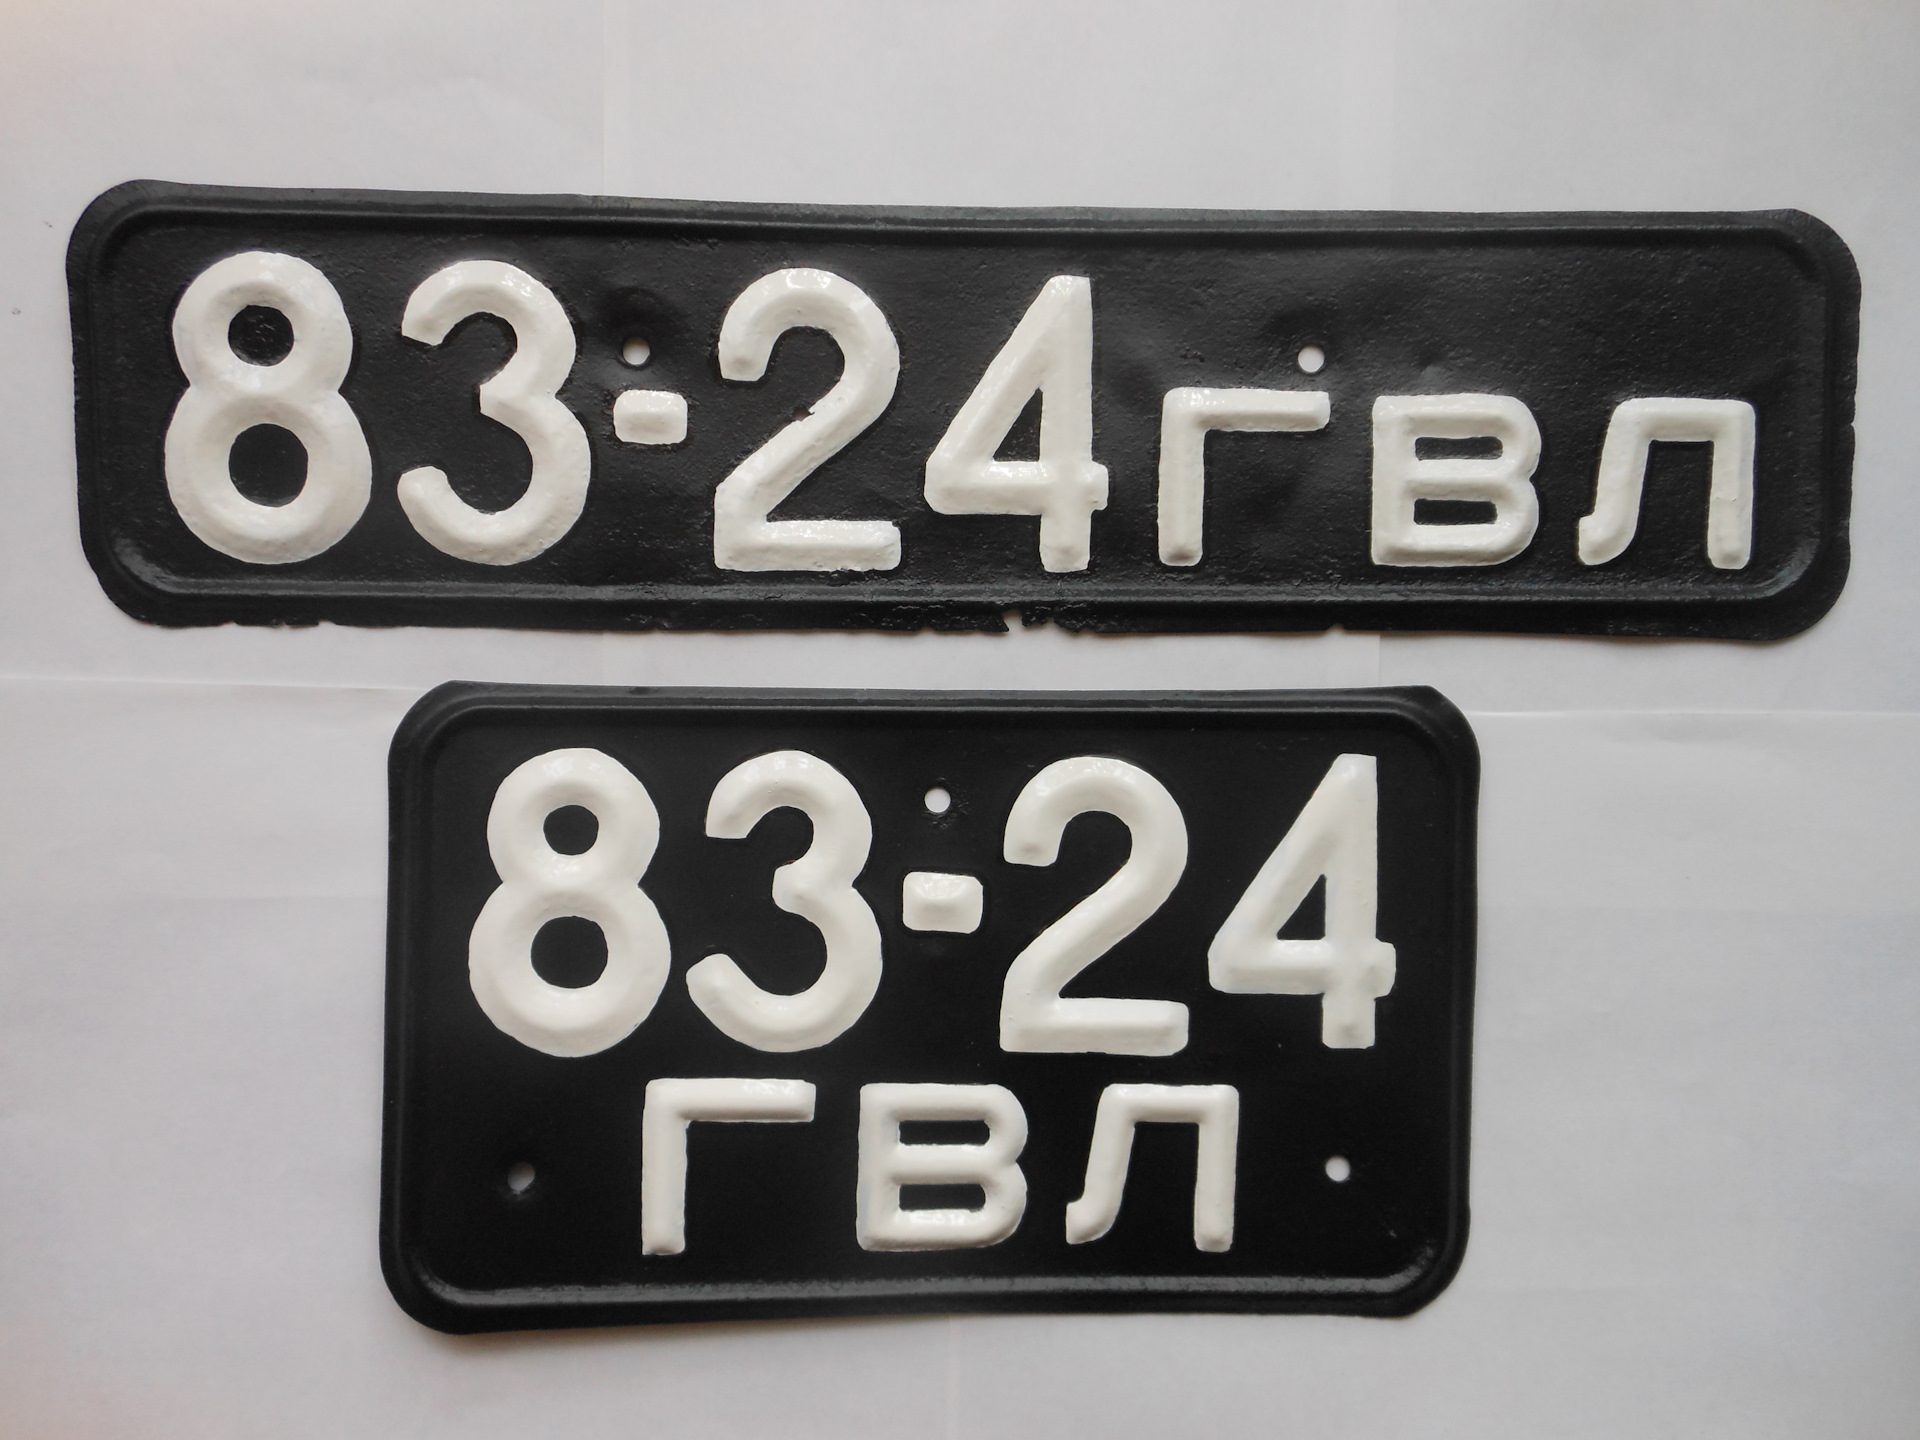 Советские номера автобусов. Советские автомобильные номера. Гос номера СССР. Советские военные номера. Черные советские номера.